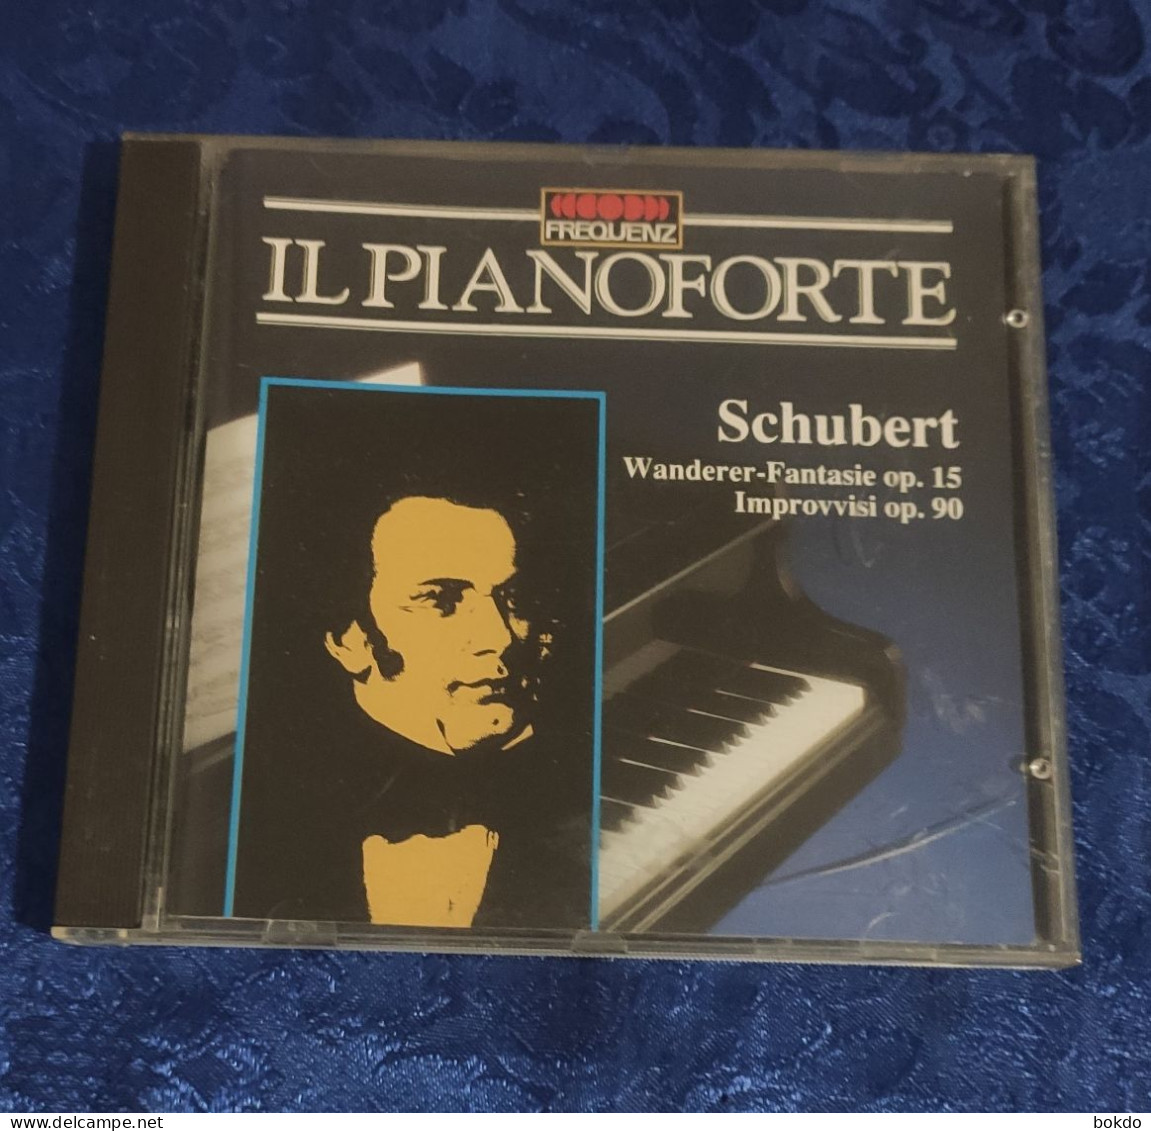 IL PIANOFORTE - Franz Schubert - Clásica